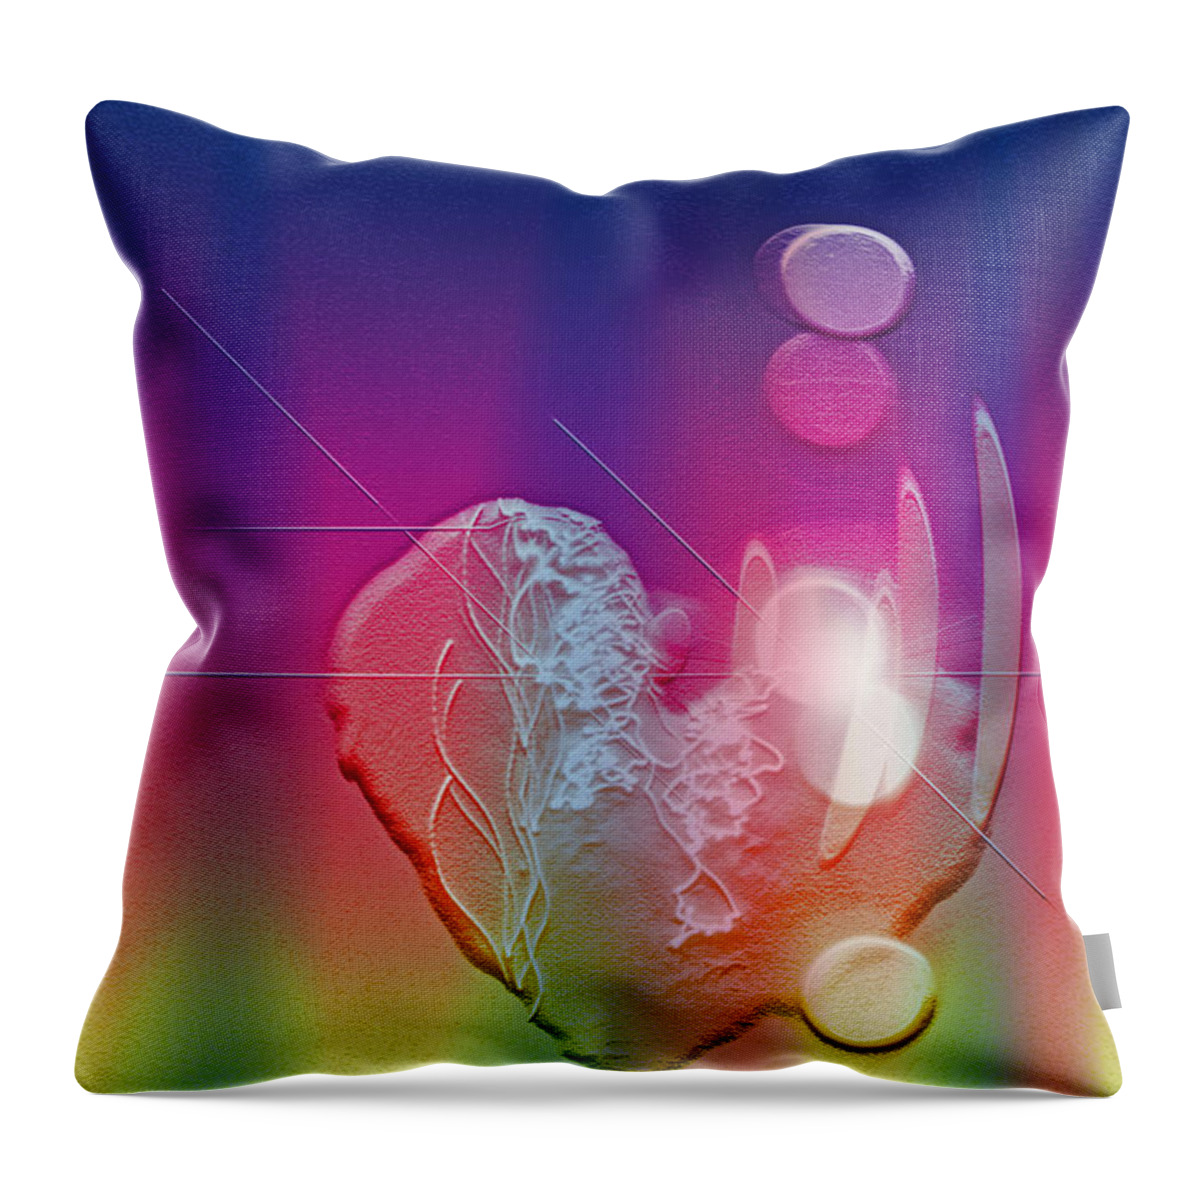 Love Art Throw Pillow featuring the digital art Light in your Heart by Linda Sannuti